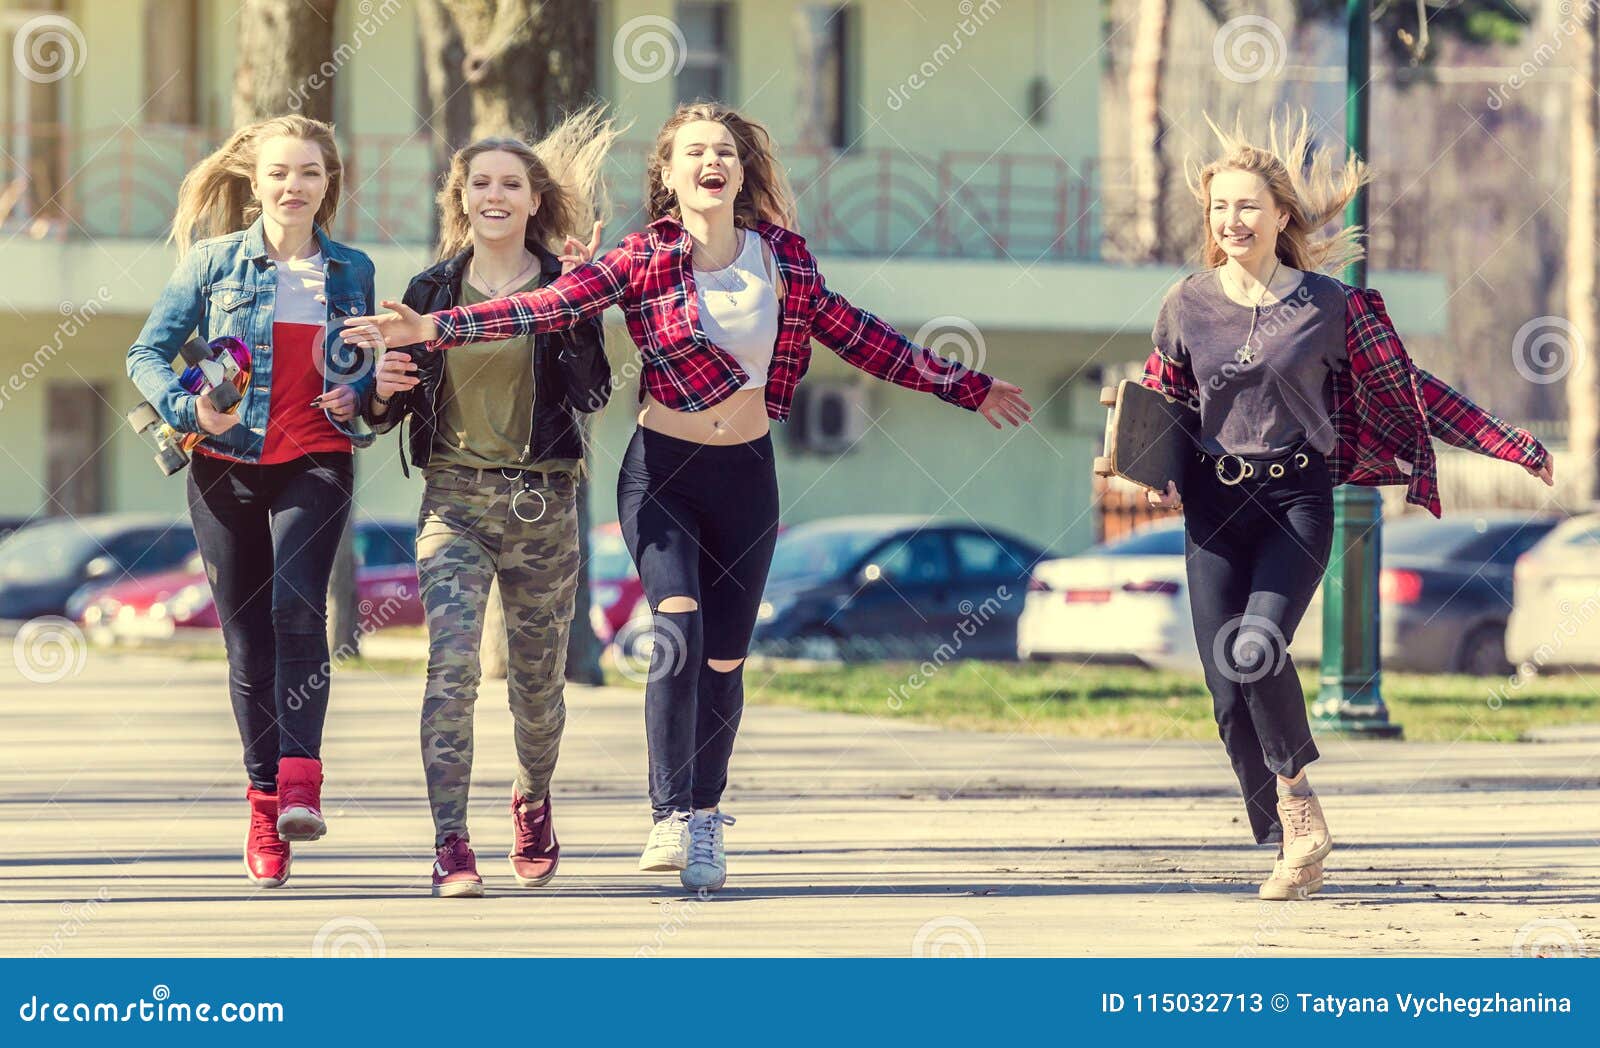 Smiling Girls Walking Down The Street And Having Fun Stock Image - Image of  joyful, college: 115032713